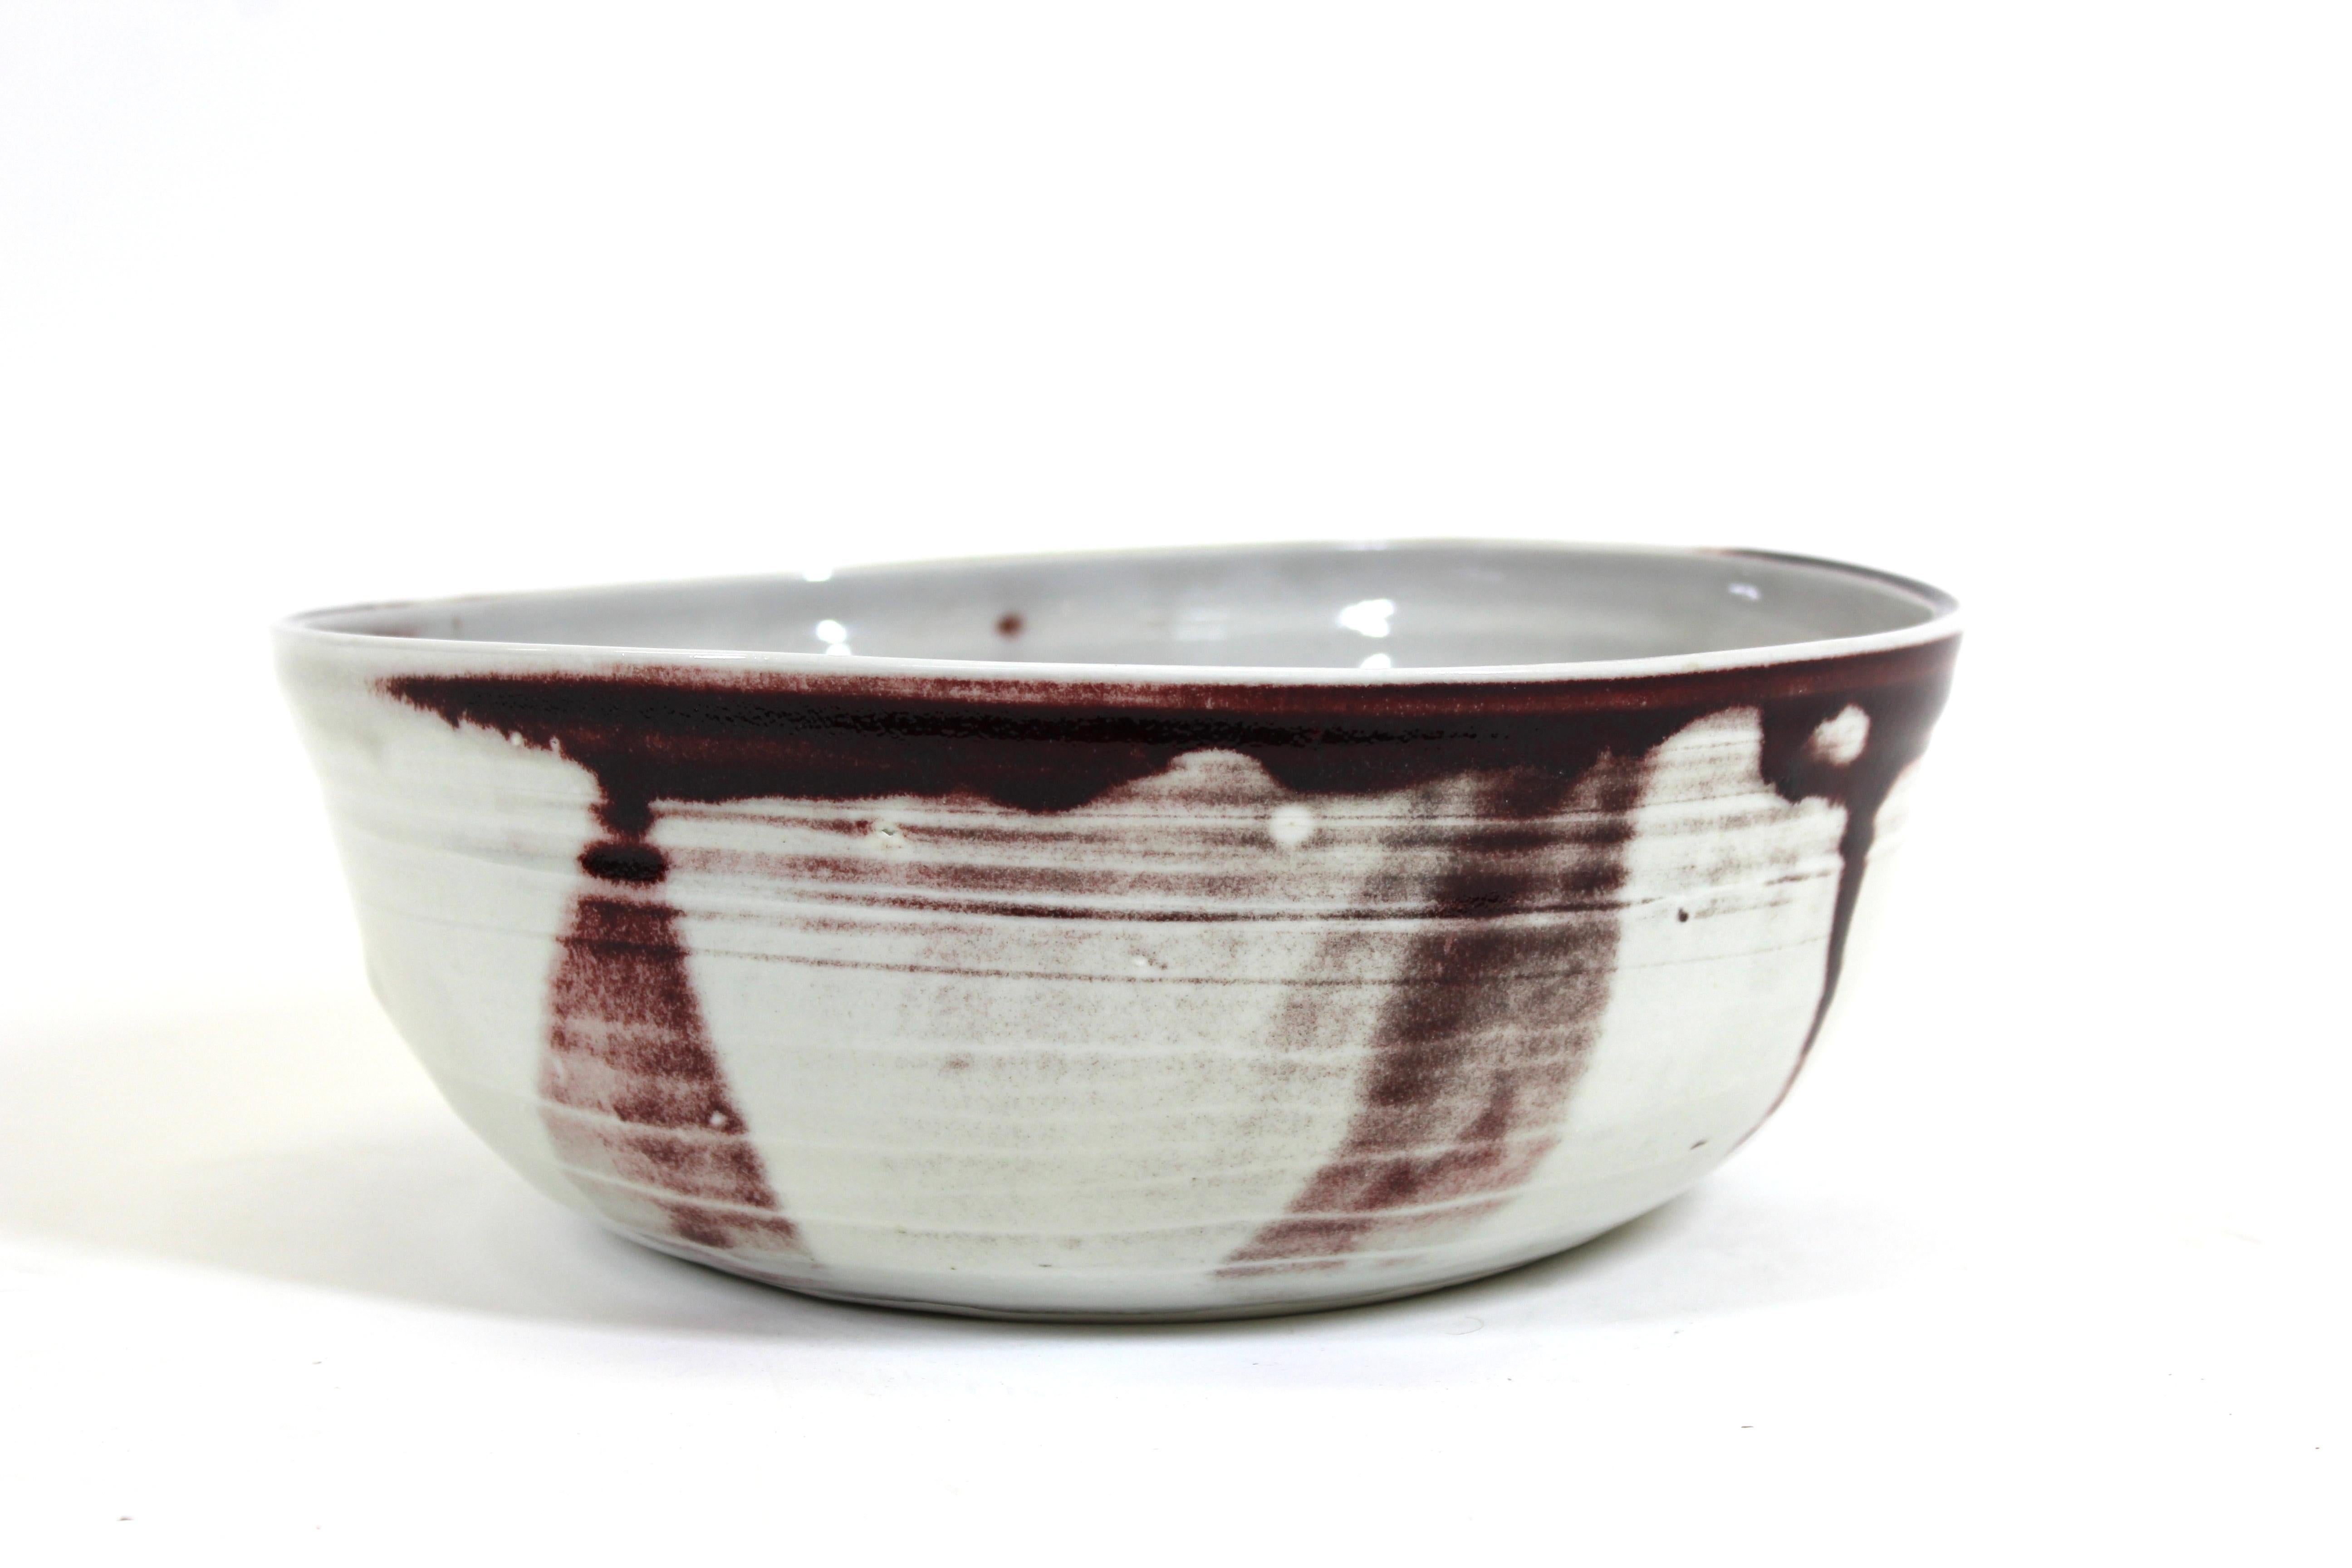 Mid-Century Modern studio ceramic glazed ceramic bowl in aubergine accents, marked 'Earth Art' on the bottom.